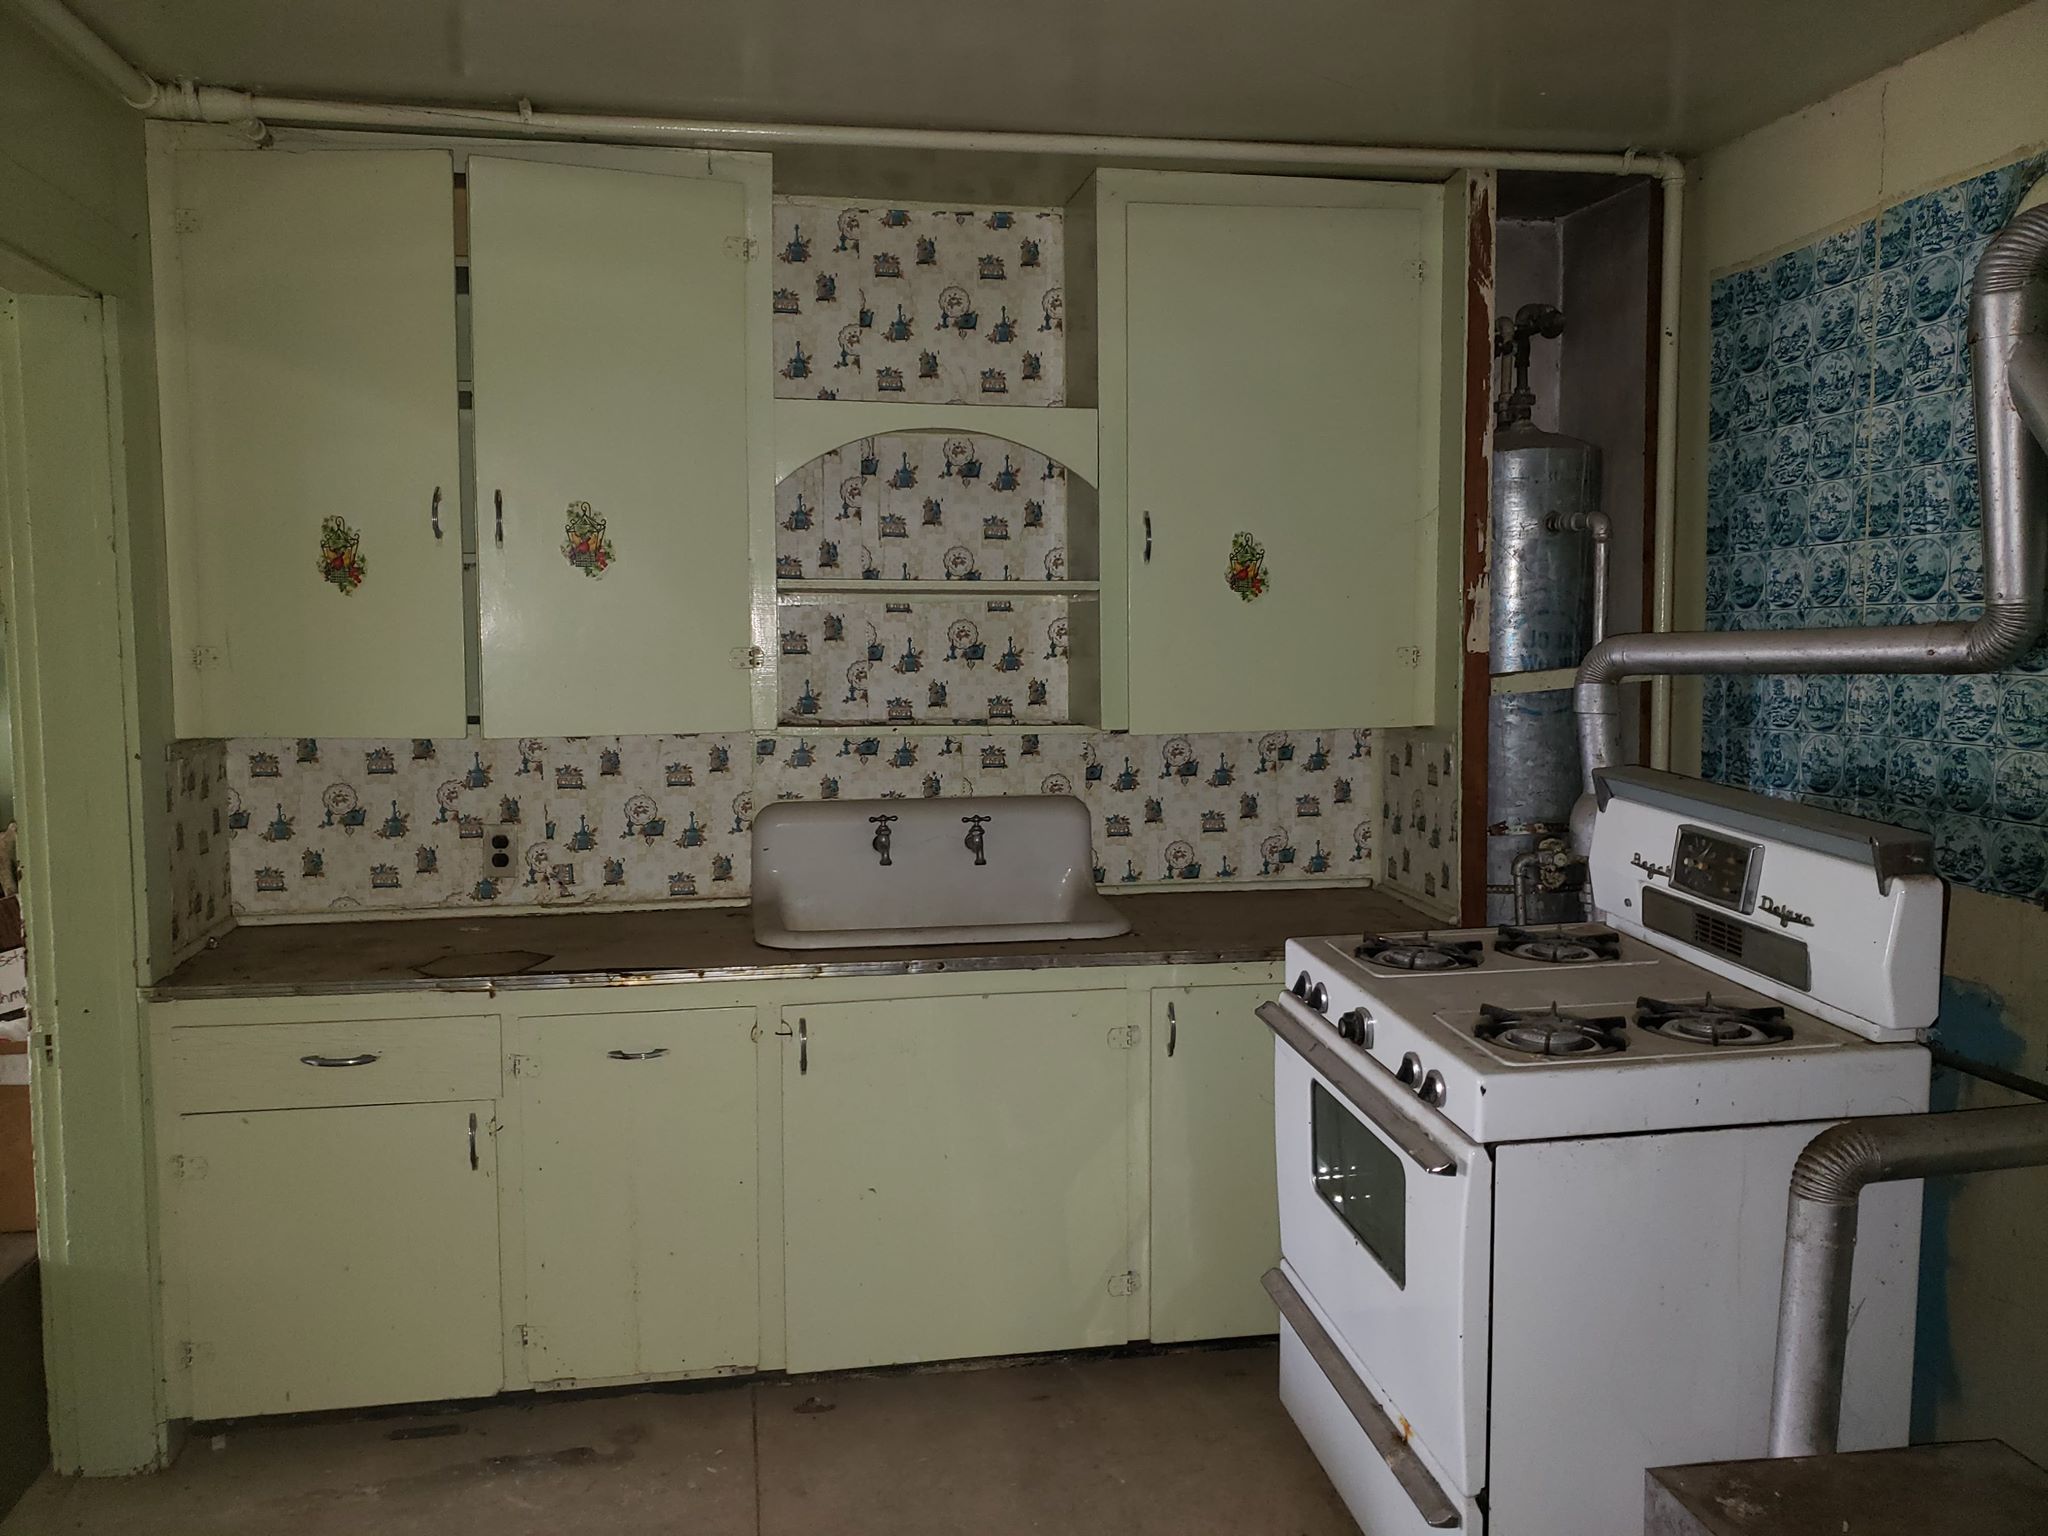 1950s kitchen of the Jobber's House.